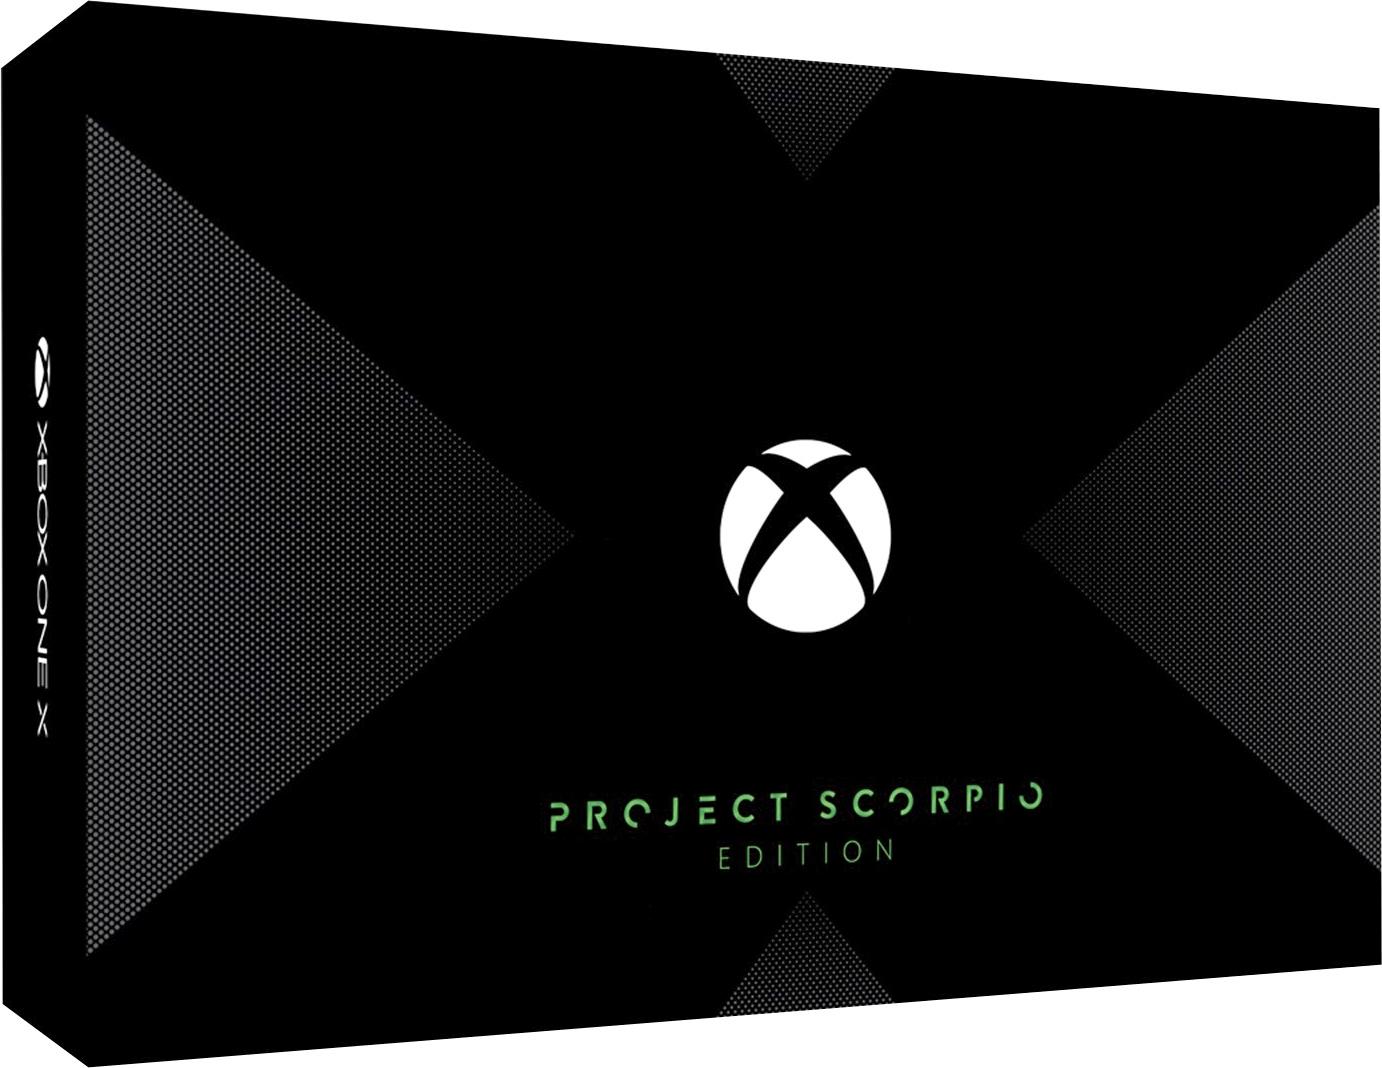 Microsoft、欧米で｢Xbox One X｣の予約受付を開始 － 今予約すると限定モデル｢Project Scorpioエディション｣に